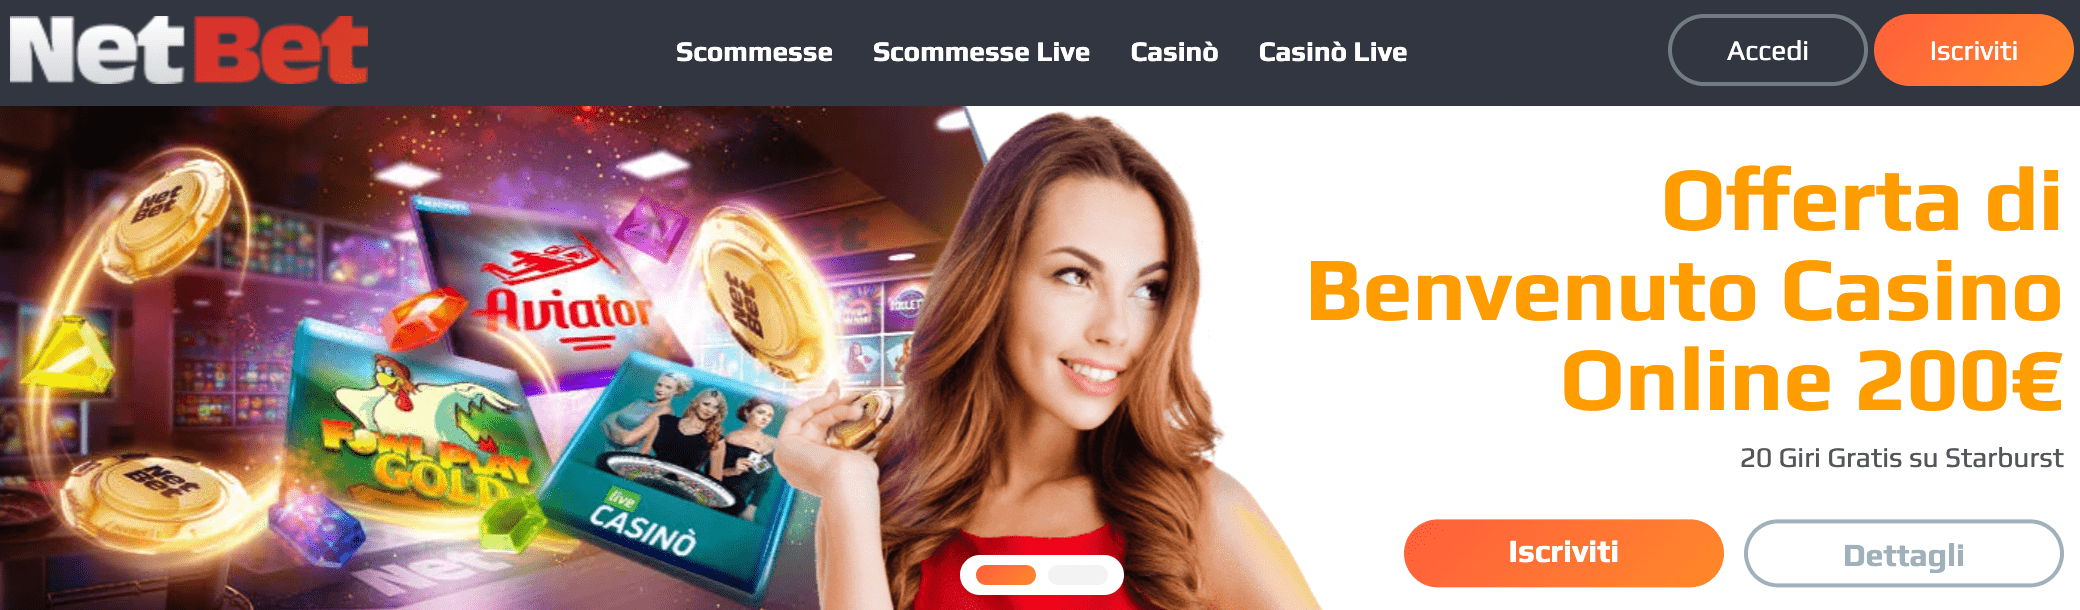 casino online netbet